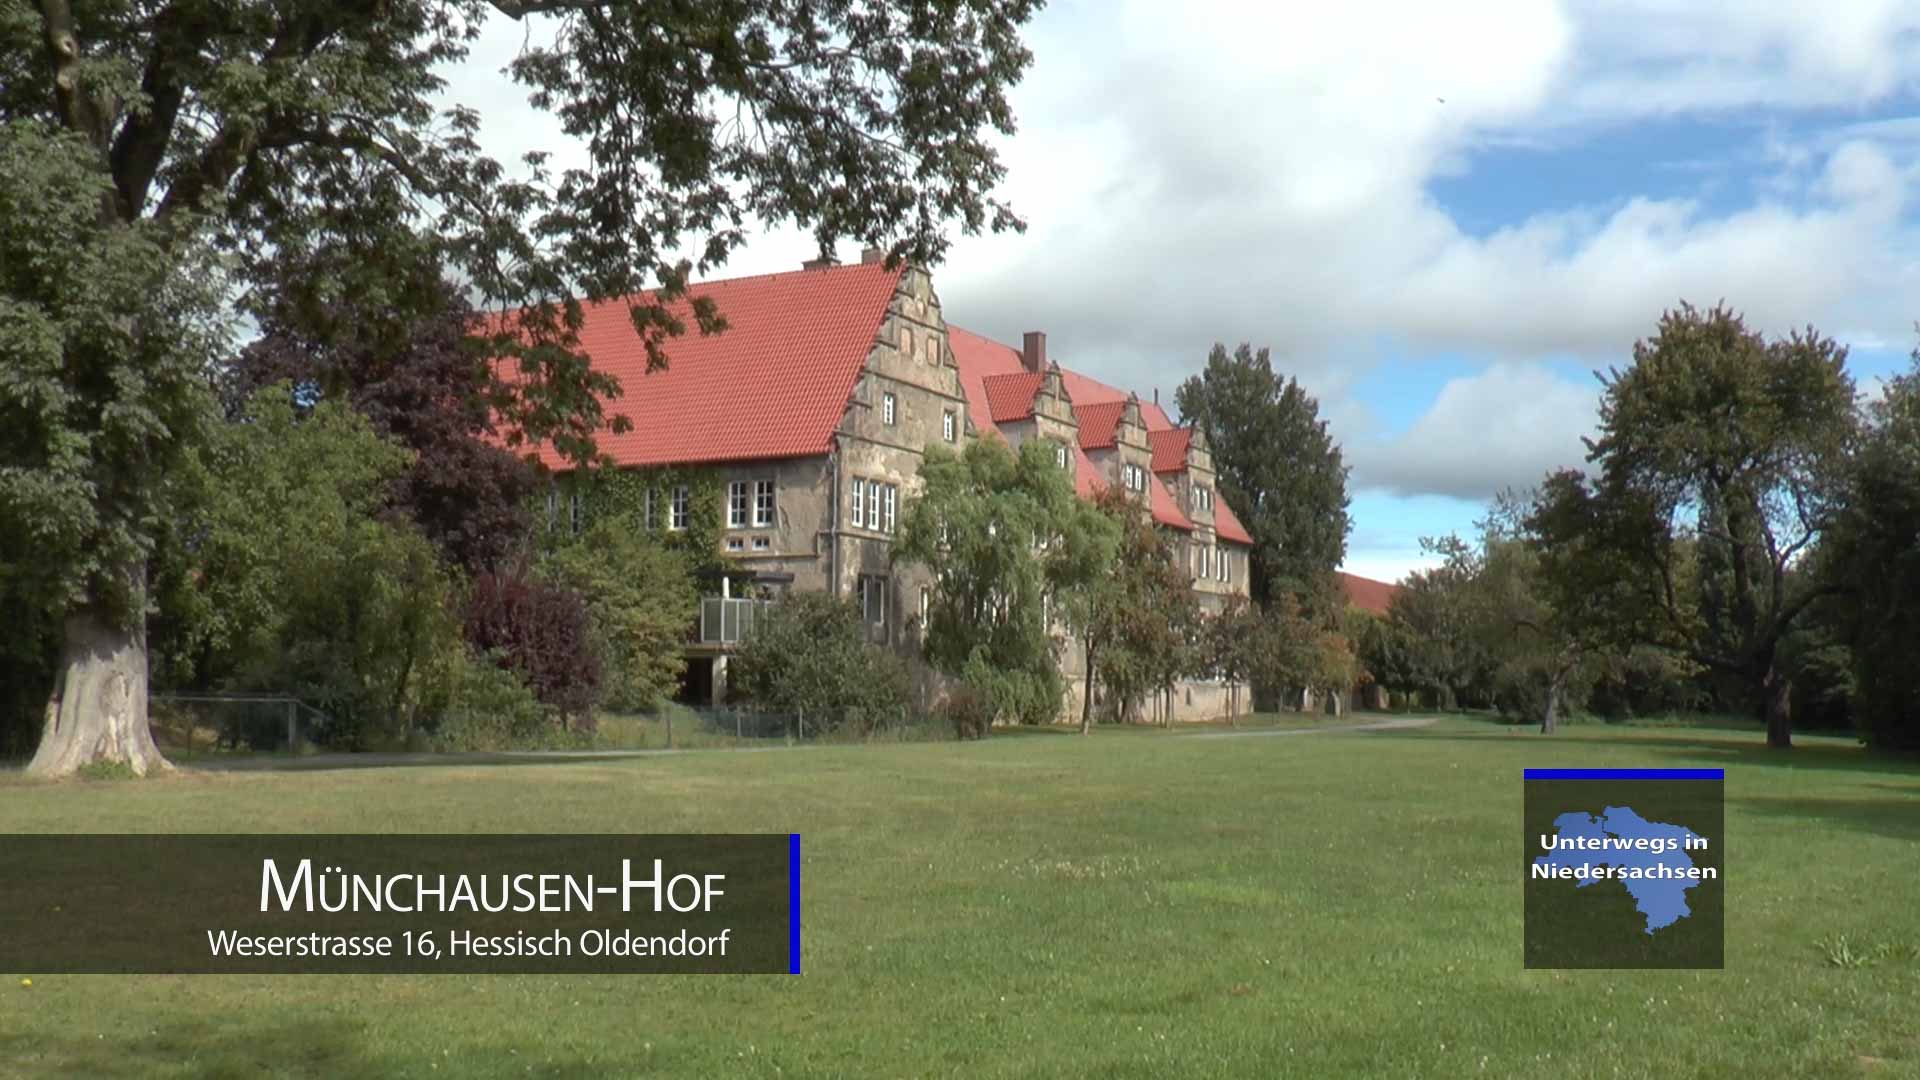 Münchhausen-Hof